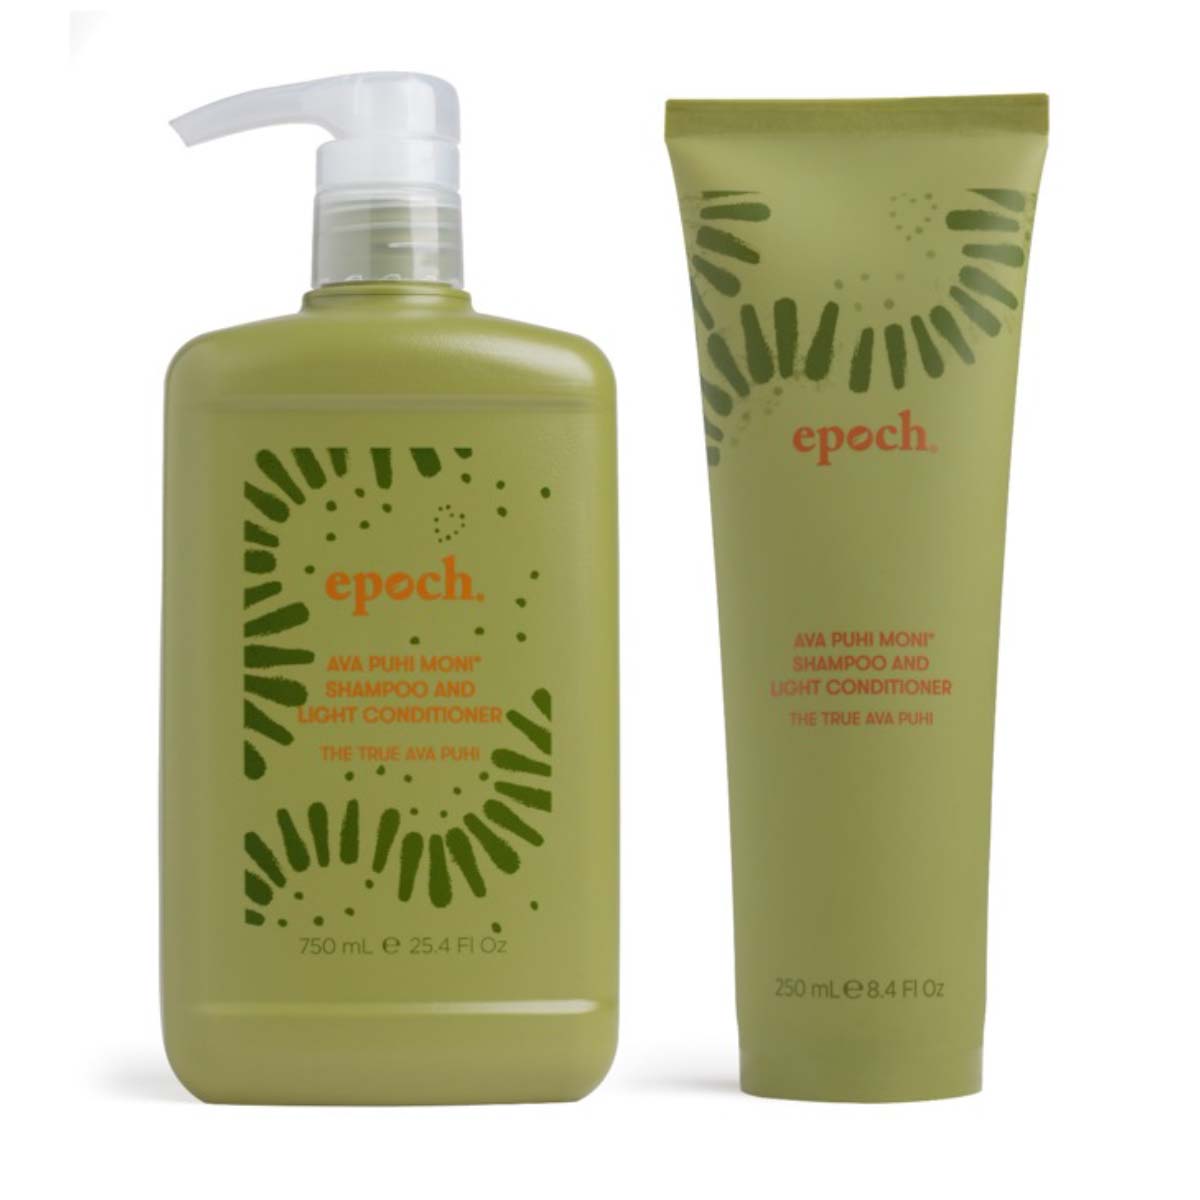 epoch-ava-puhi-moni-shampoo-and-conditioner-packshot.jpg